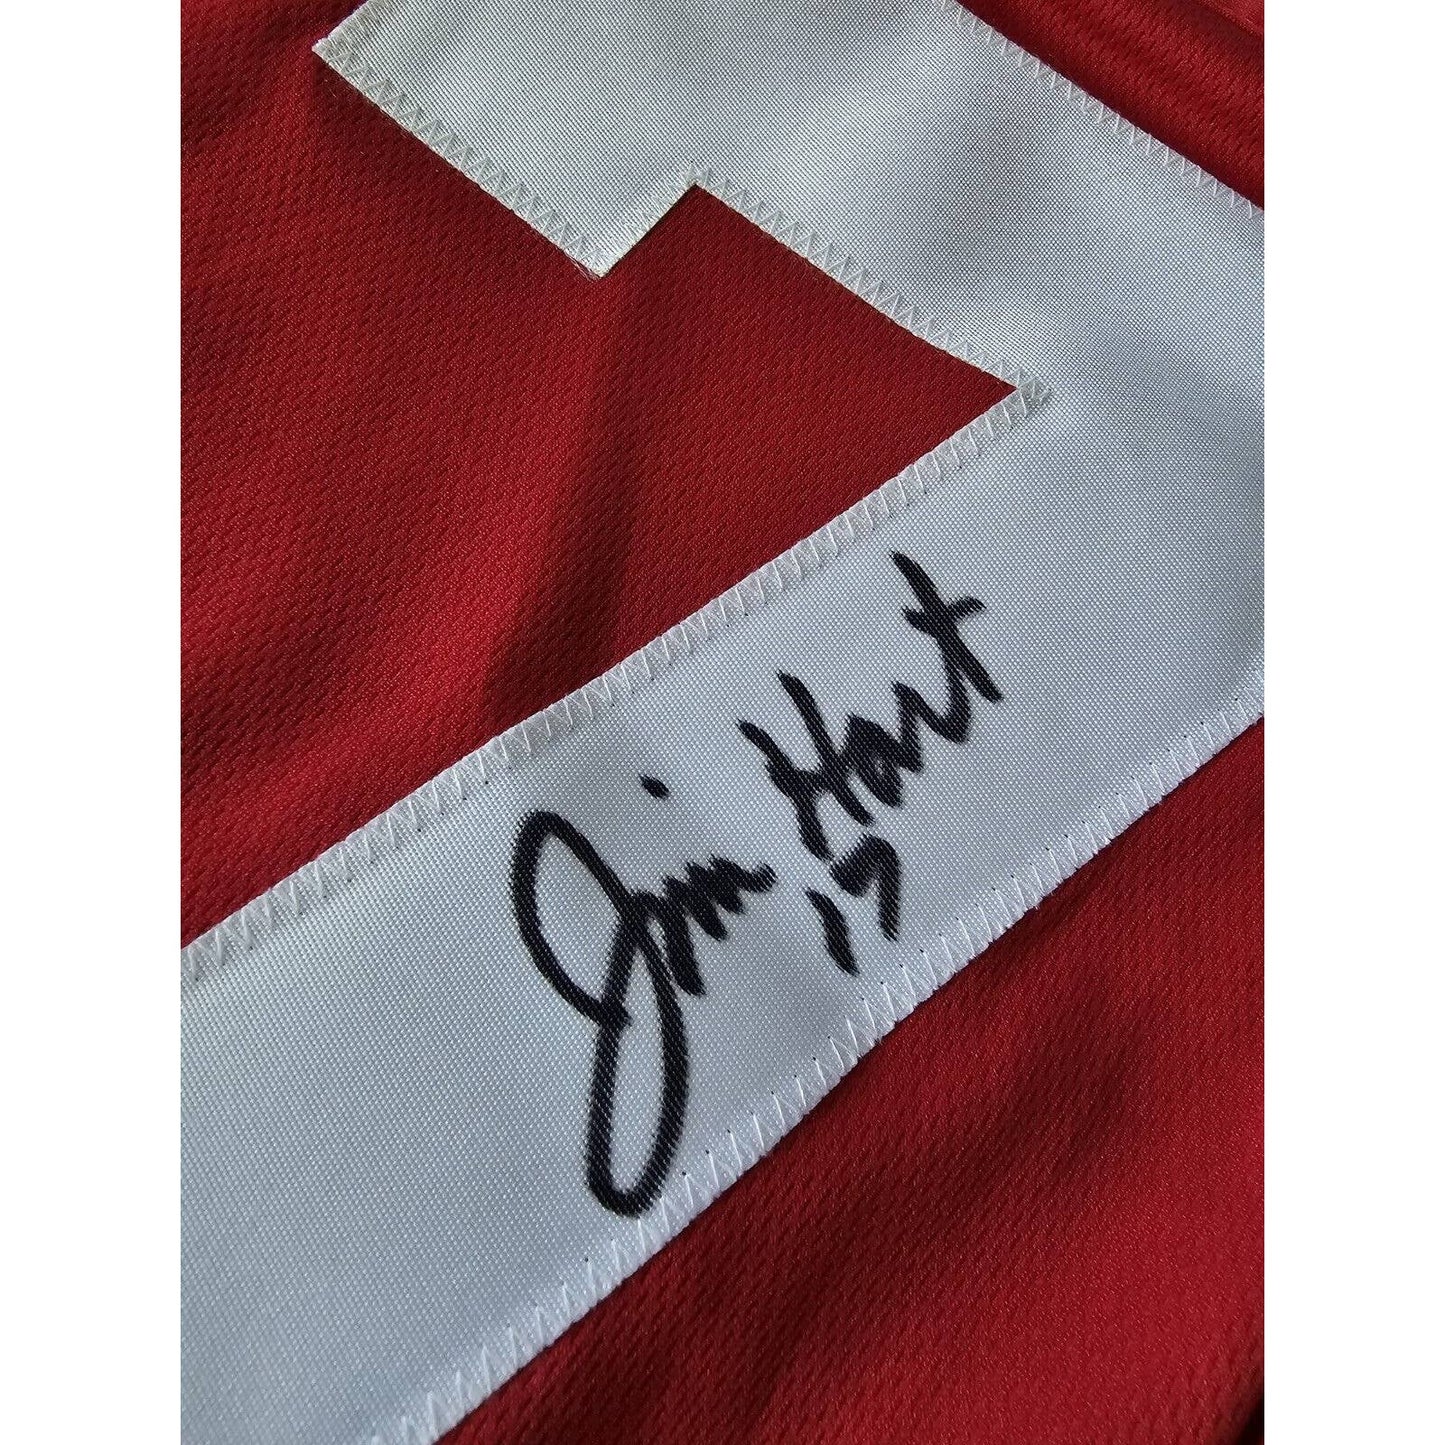 Jim Hart Autographed/Signed Jersey JSA Sticker Arizona Cardinals PLEASE READ